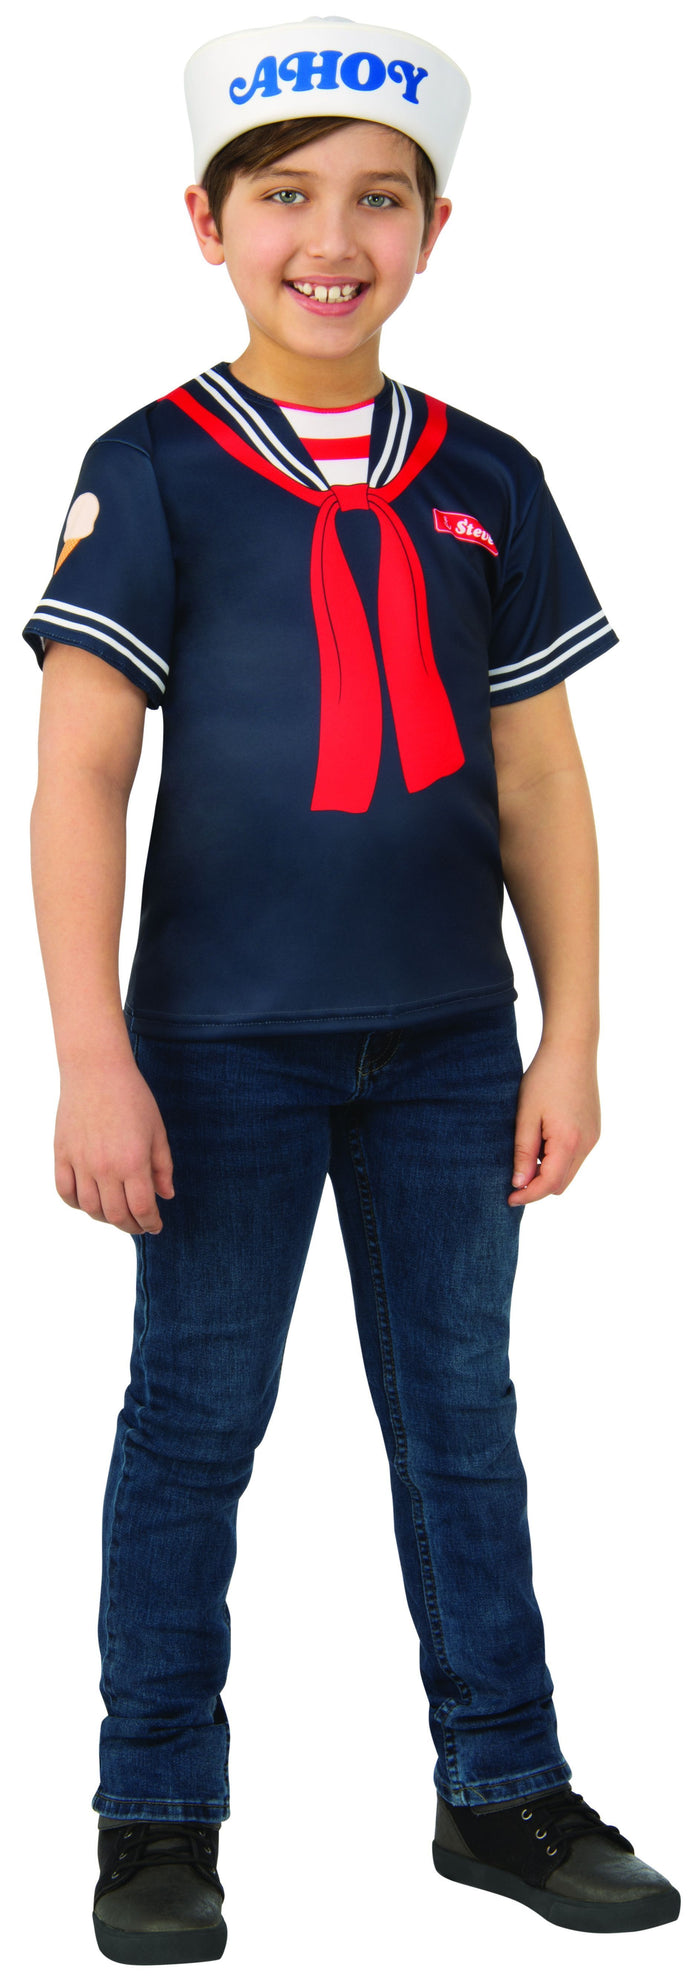 Steve 'Scoops Ahoy Uniform' Costume for Kids - Netflix Stranger Things